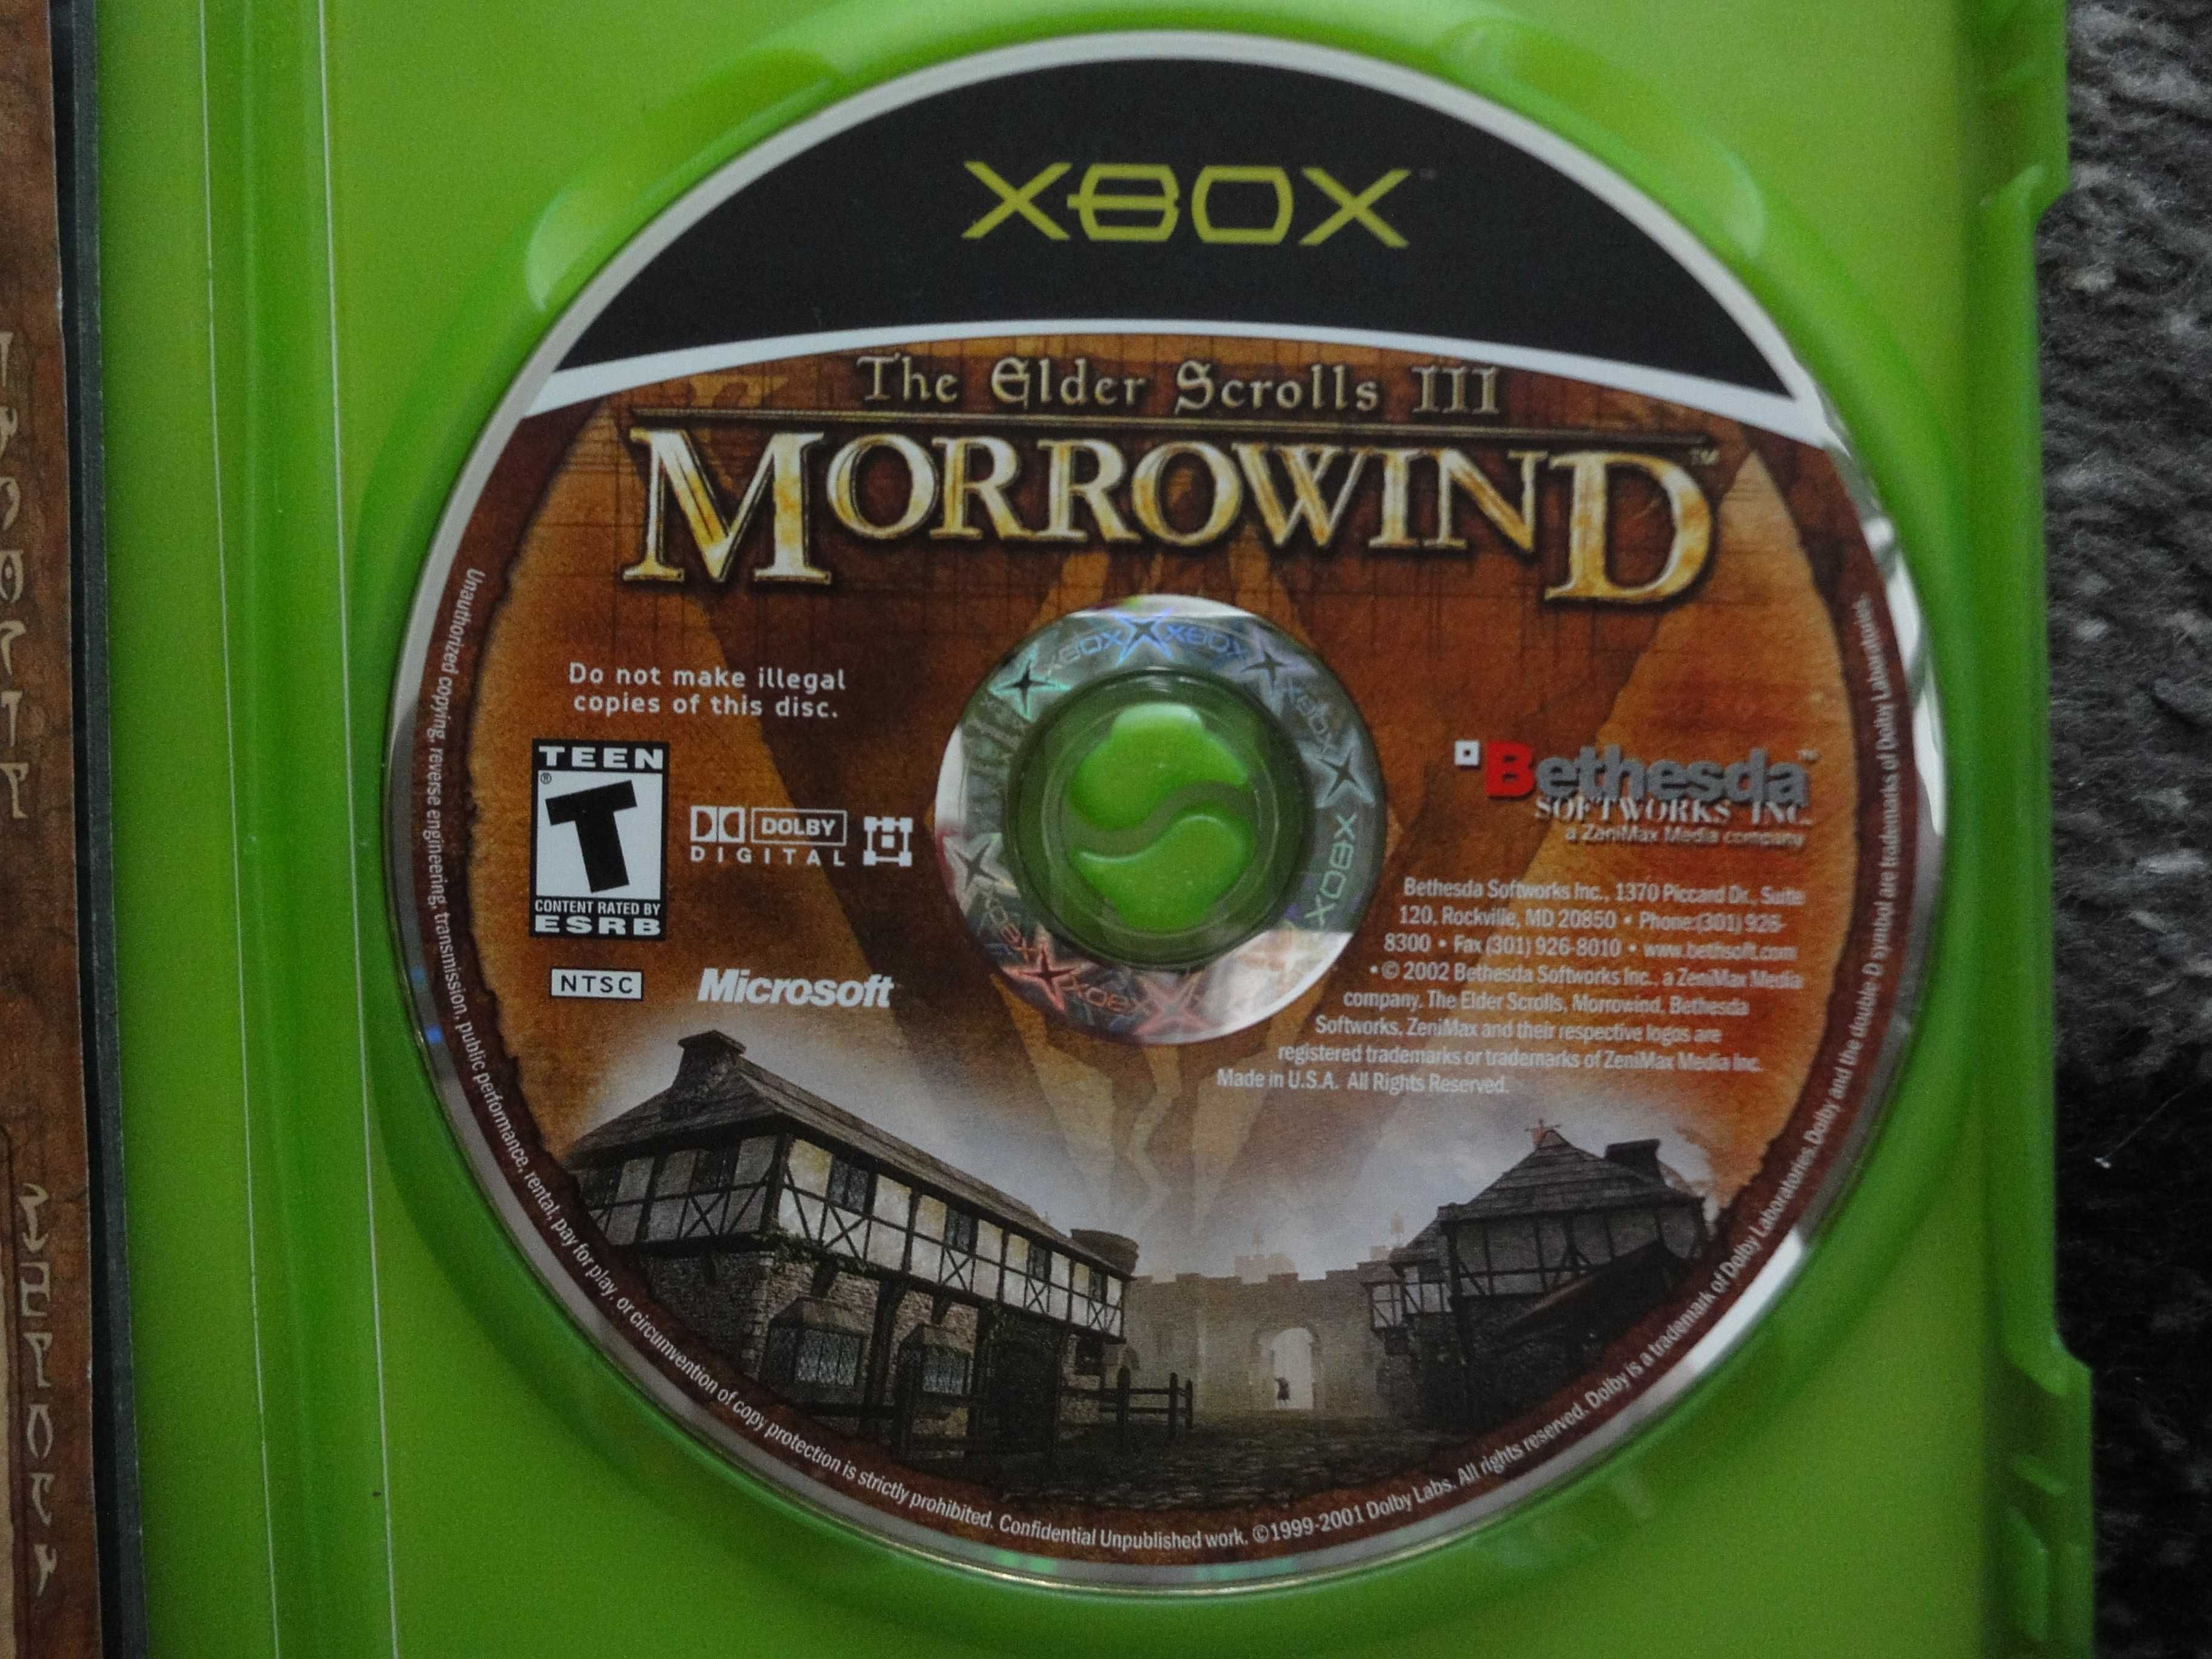 The Elder Scrolls III: Morrowind - gra na konsolę xbox